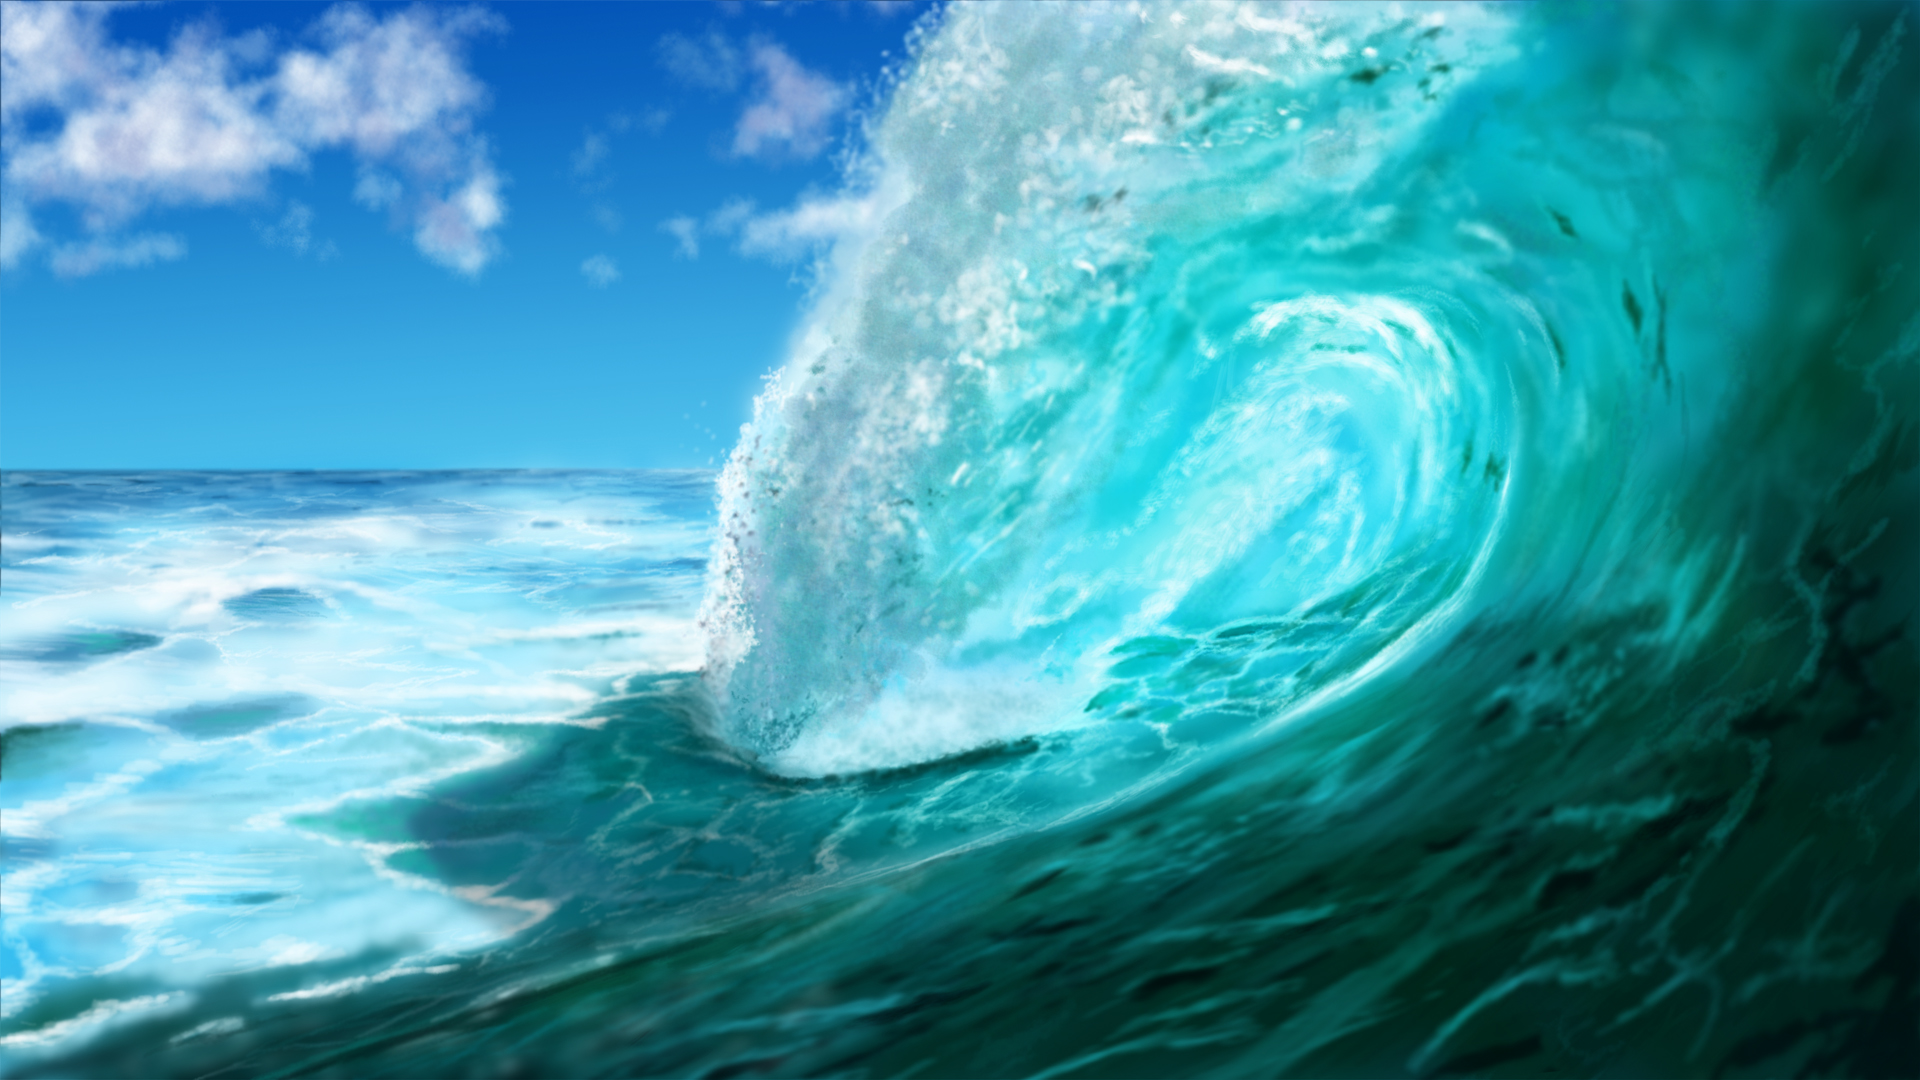 painted Wallpaper   Ocean Wave Meereswoge Welle by dasflon on